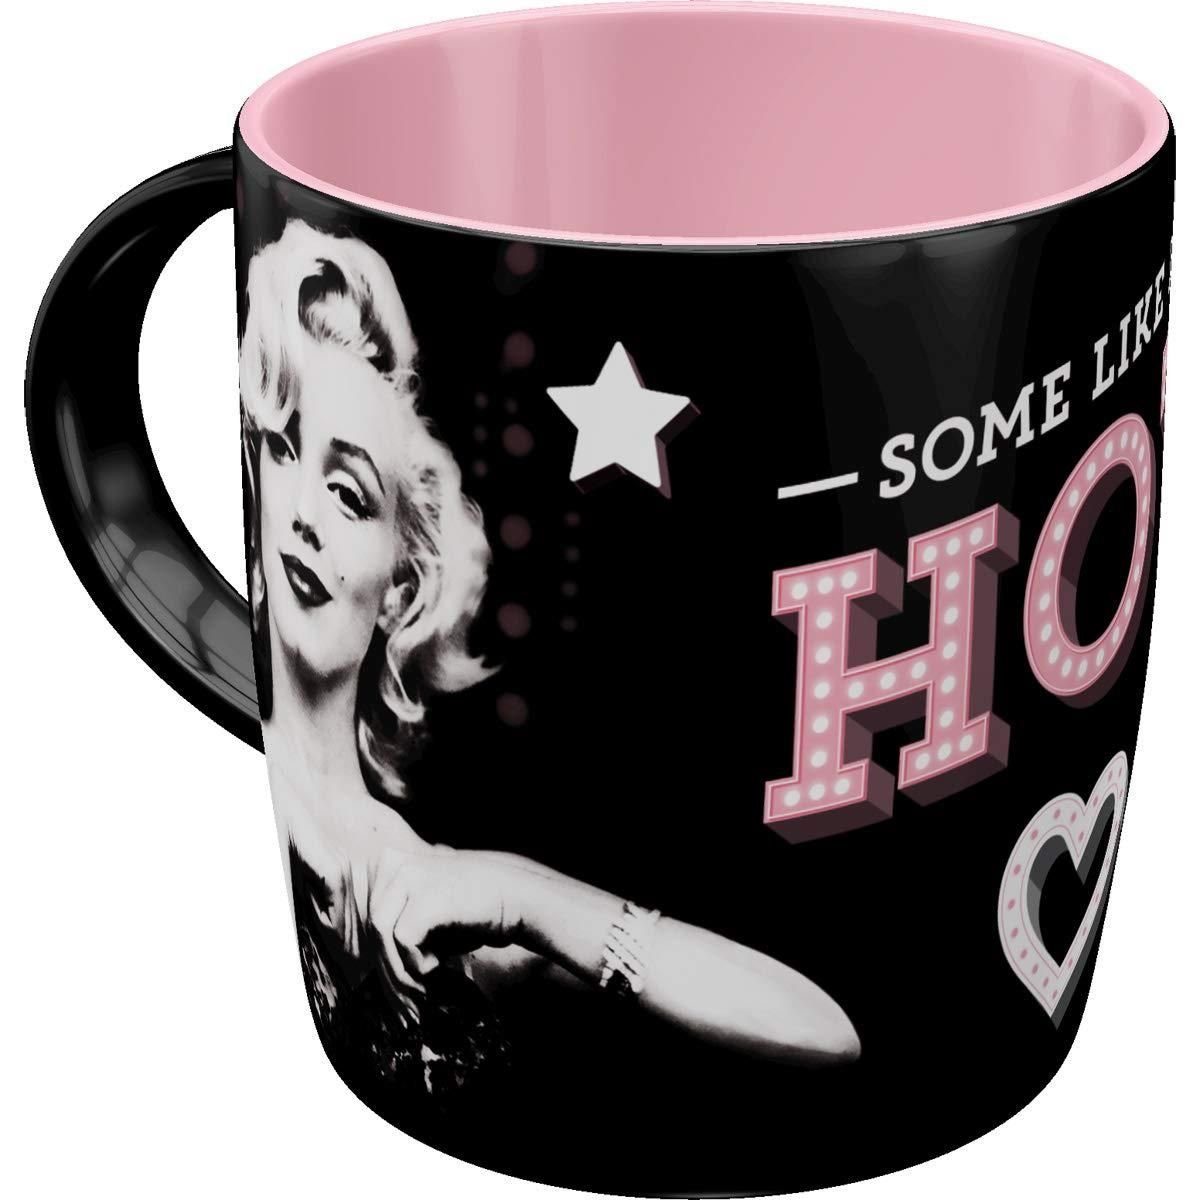 Nostalgic-Art Tasse Kaffeetasse - Celebrities - Marilyn Monroe Some Like It Hot